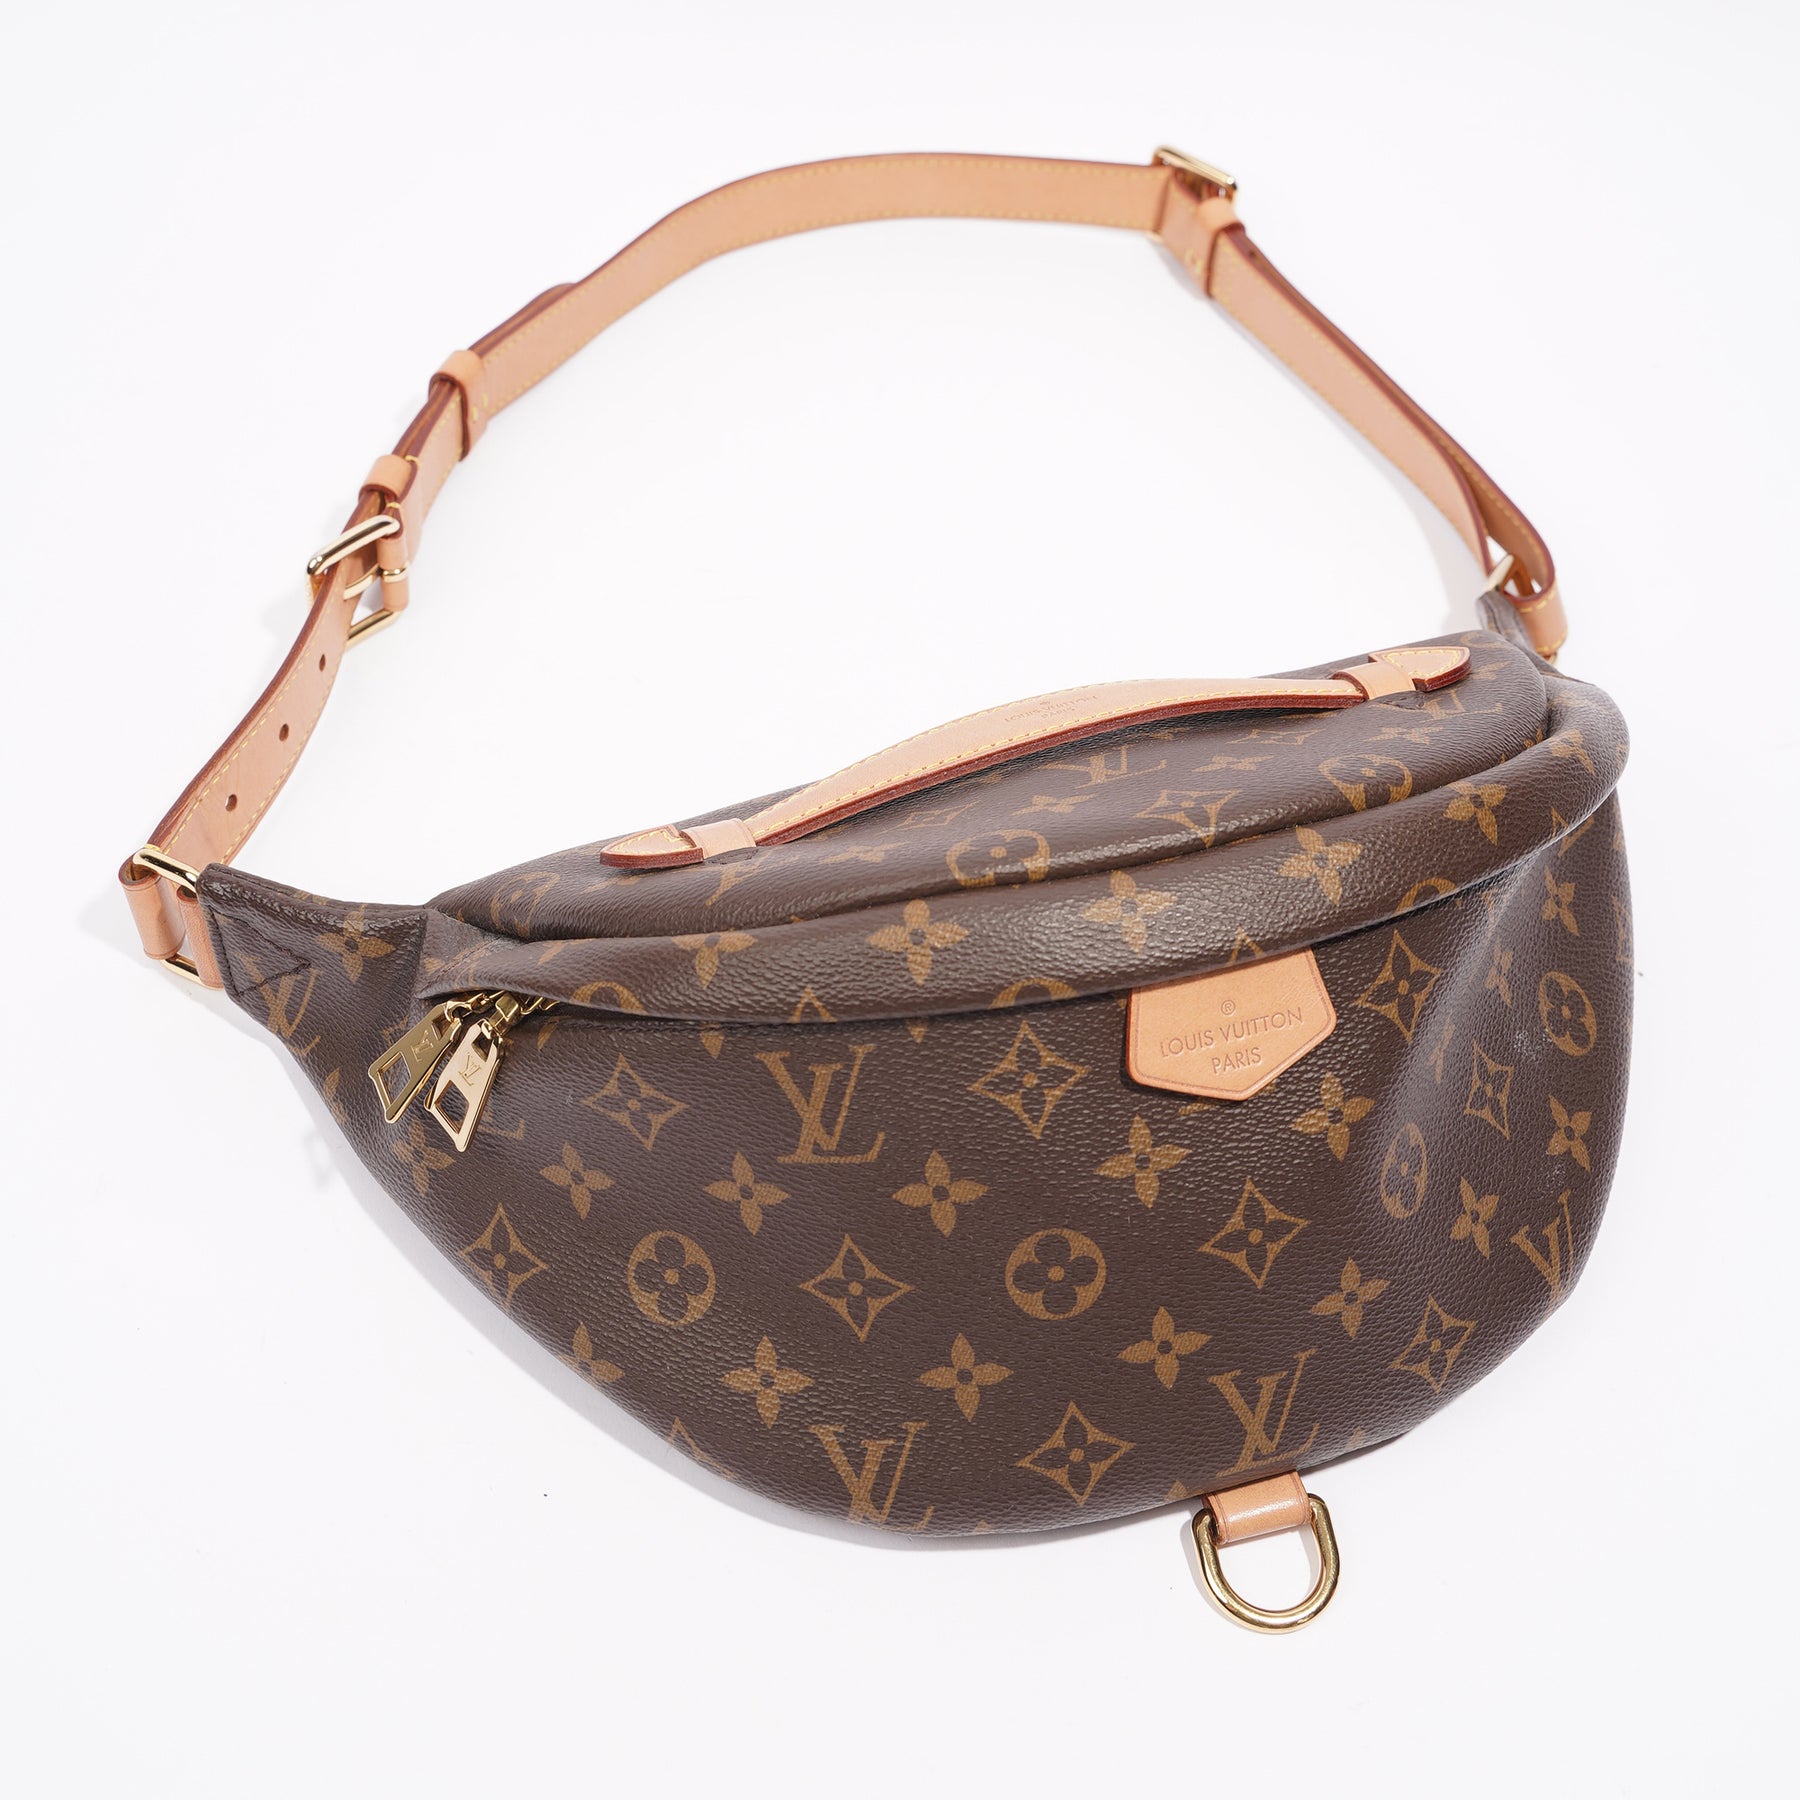 LOUIS VUITTON Handbags Louis Vuitton Cloth For Female for Women